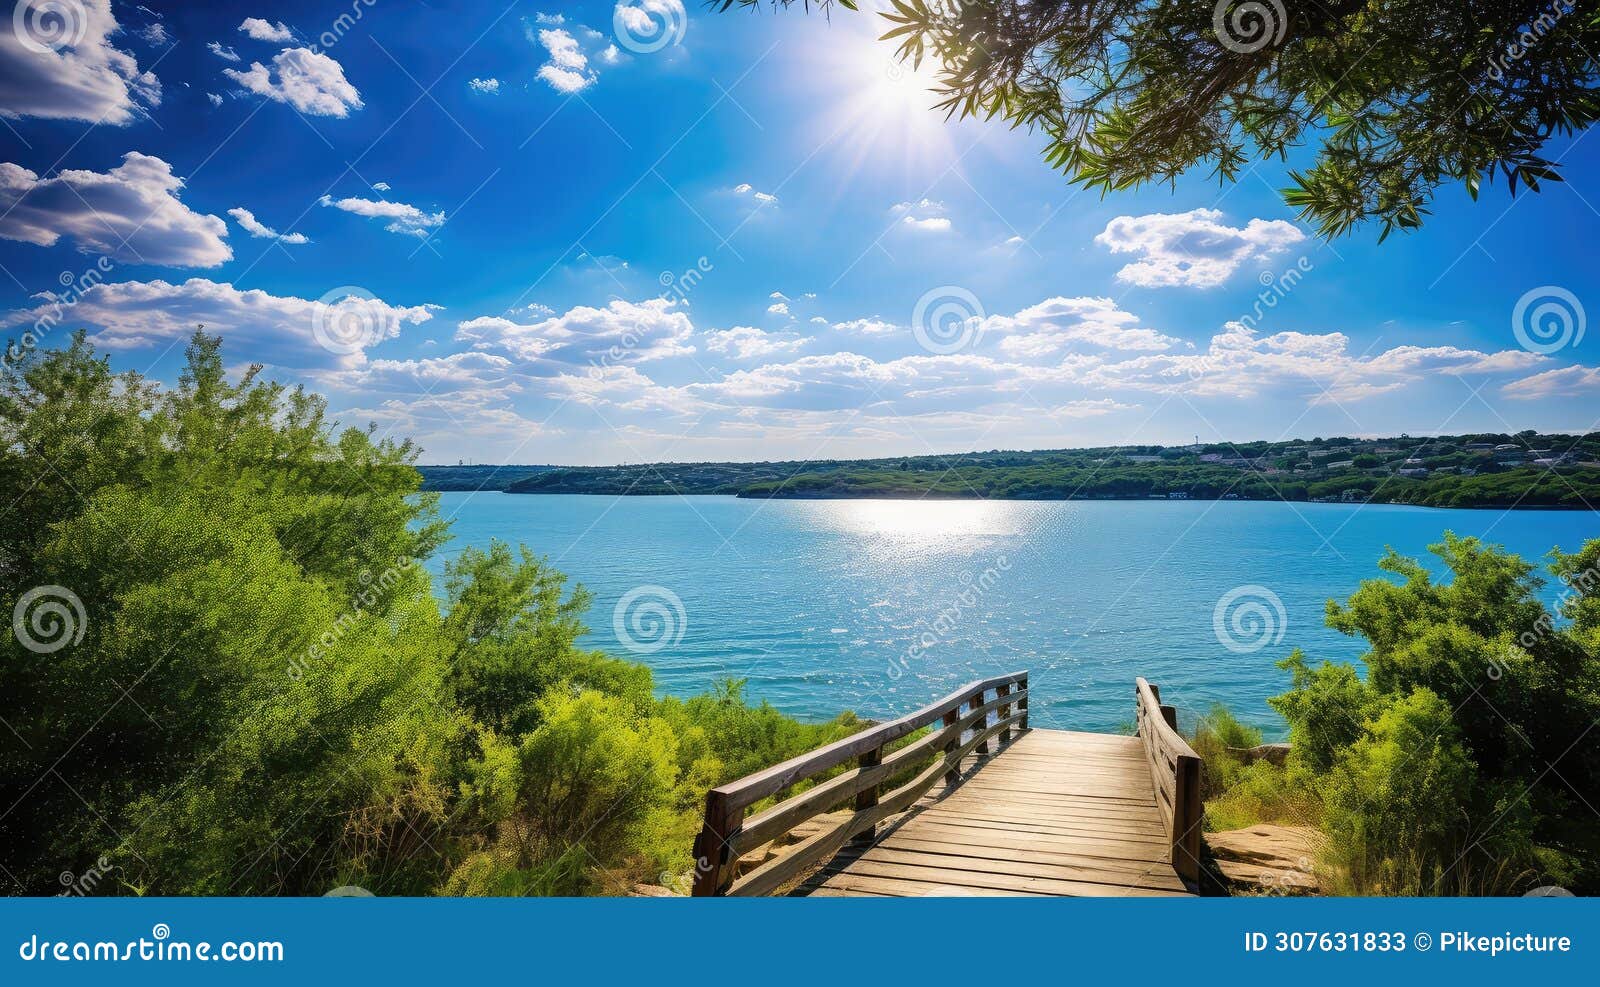 peaceful lake wonderful landscap